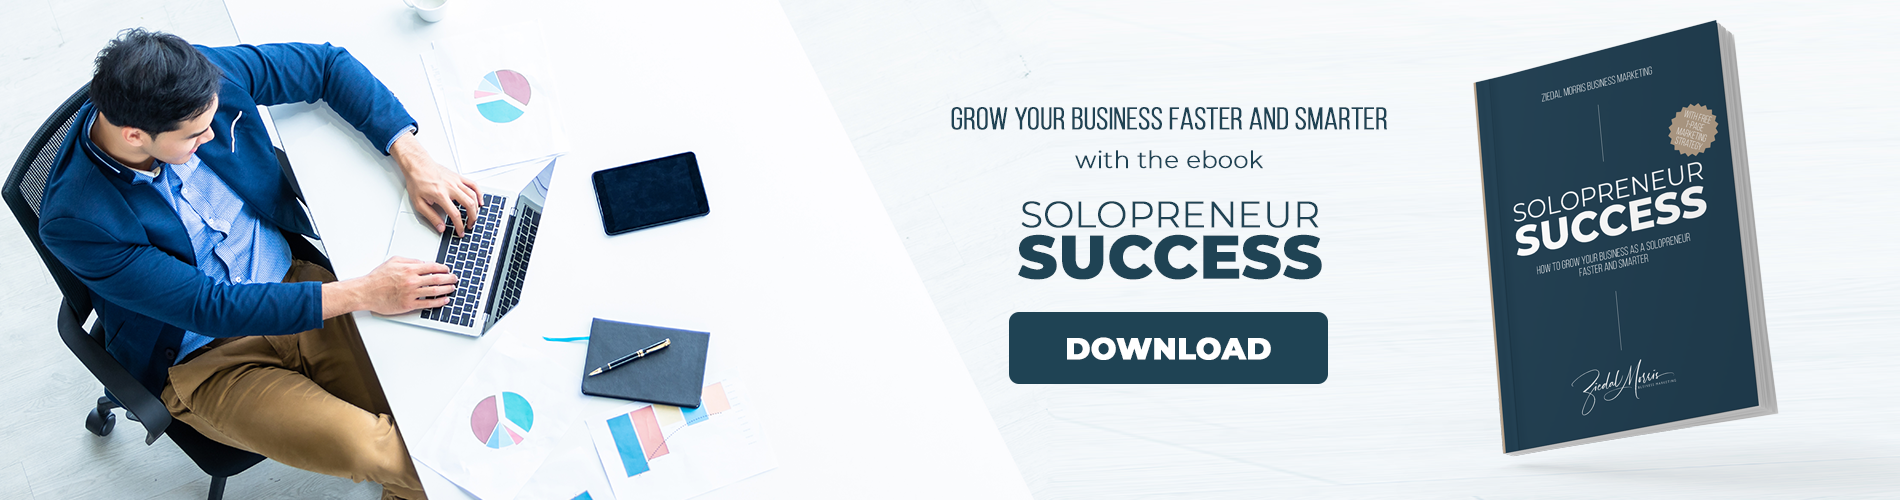 Solopreneur Success Ebook